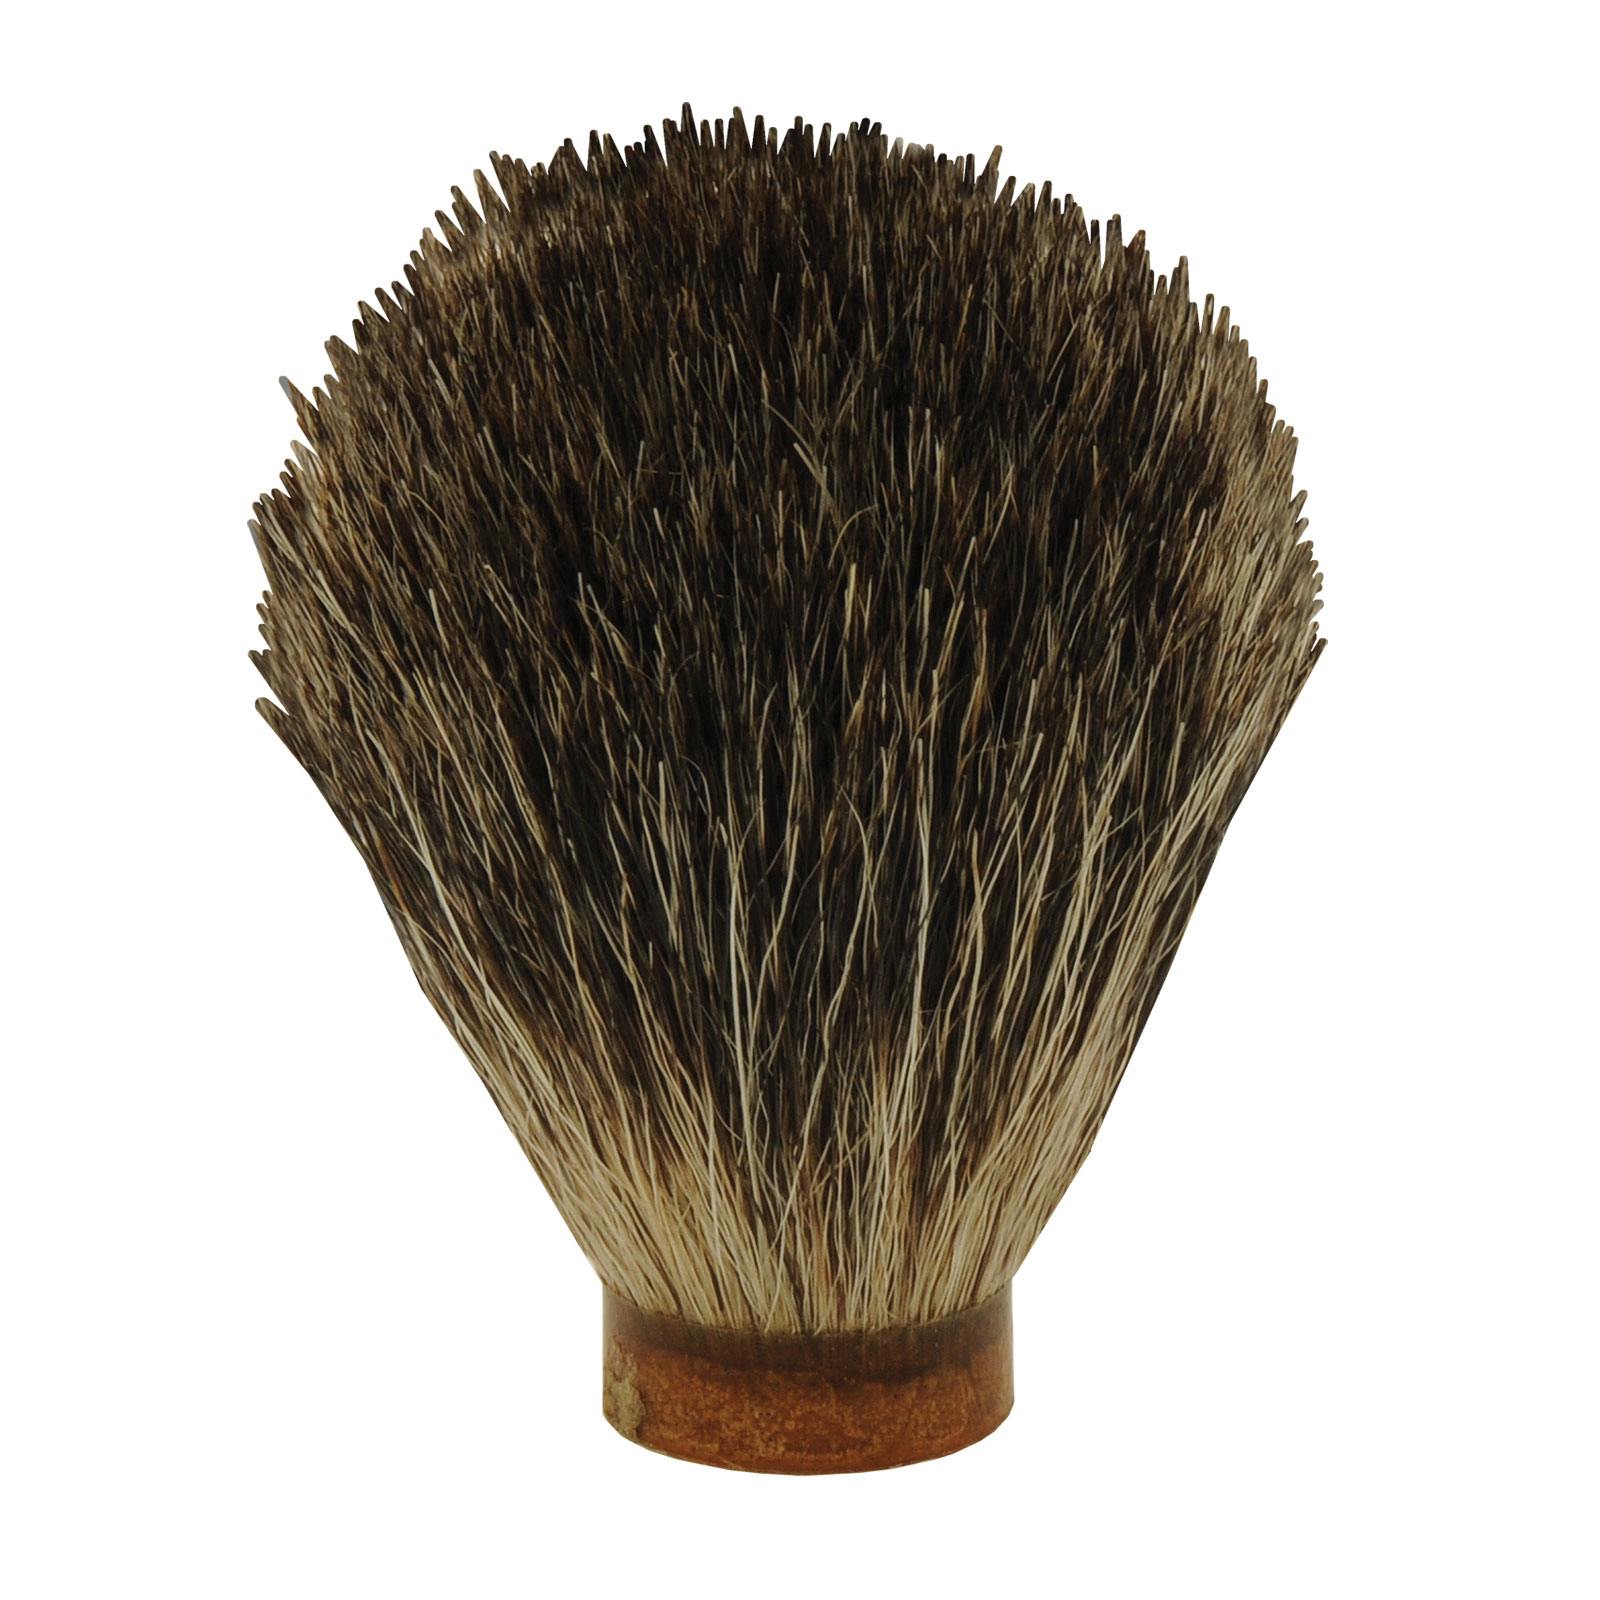 A Grade Mixed Badger Hair Shaving Brush ( base) Standard Quality at  Penn State Industries